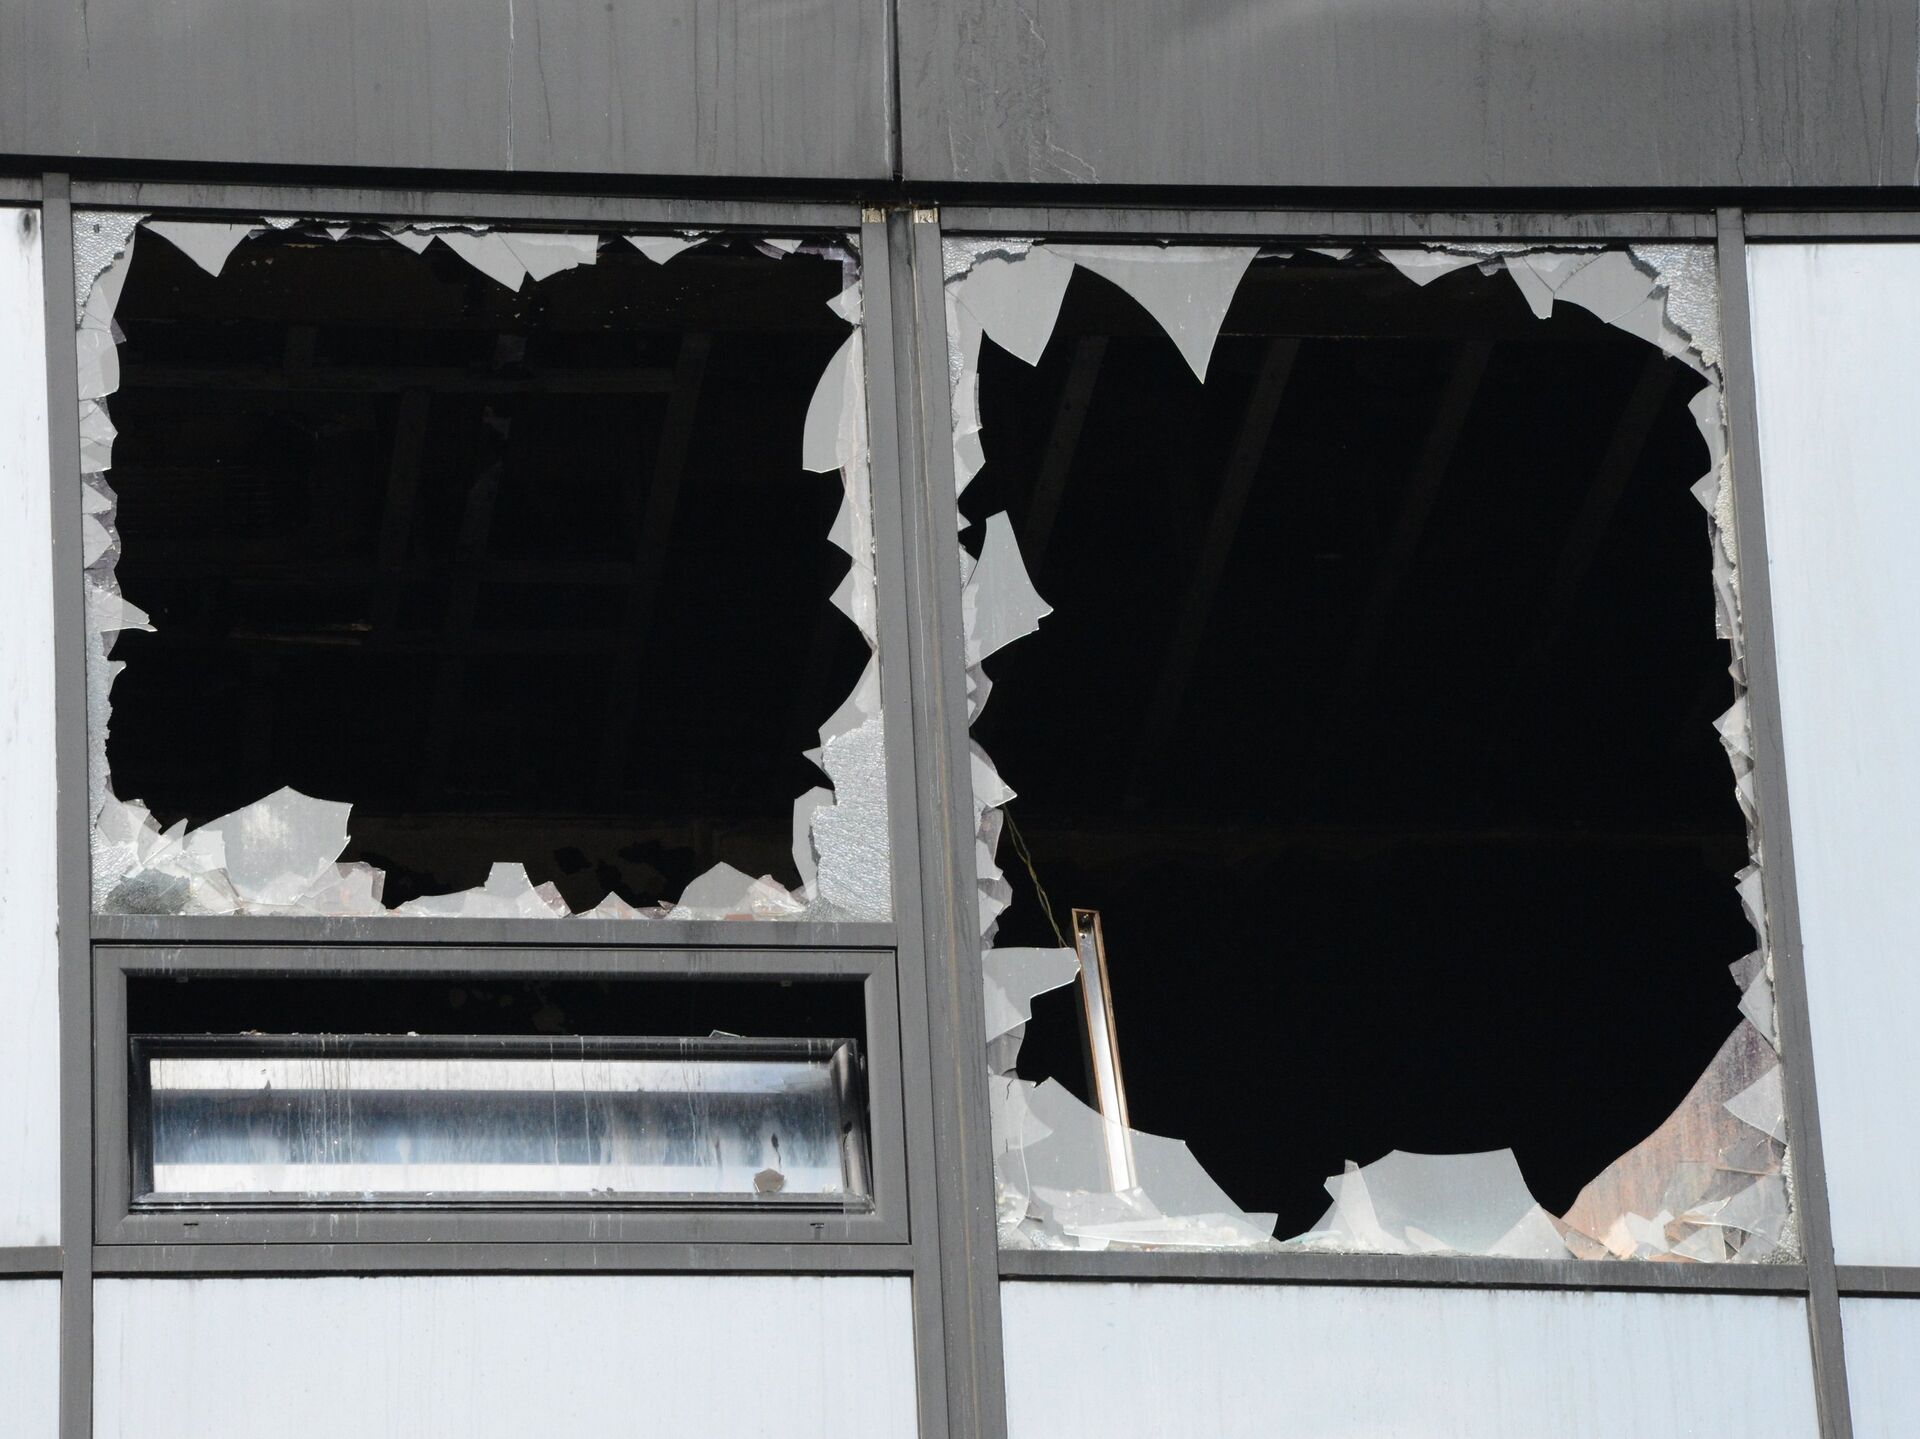 Разбить стекло дома. Разбитое окно. Разбитые окна. Разбитое стекло в окне. Выбитое окно.